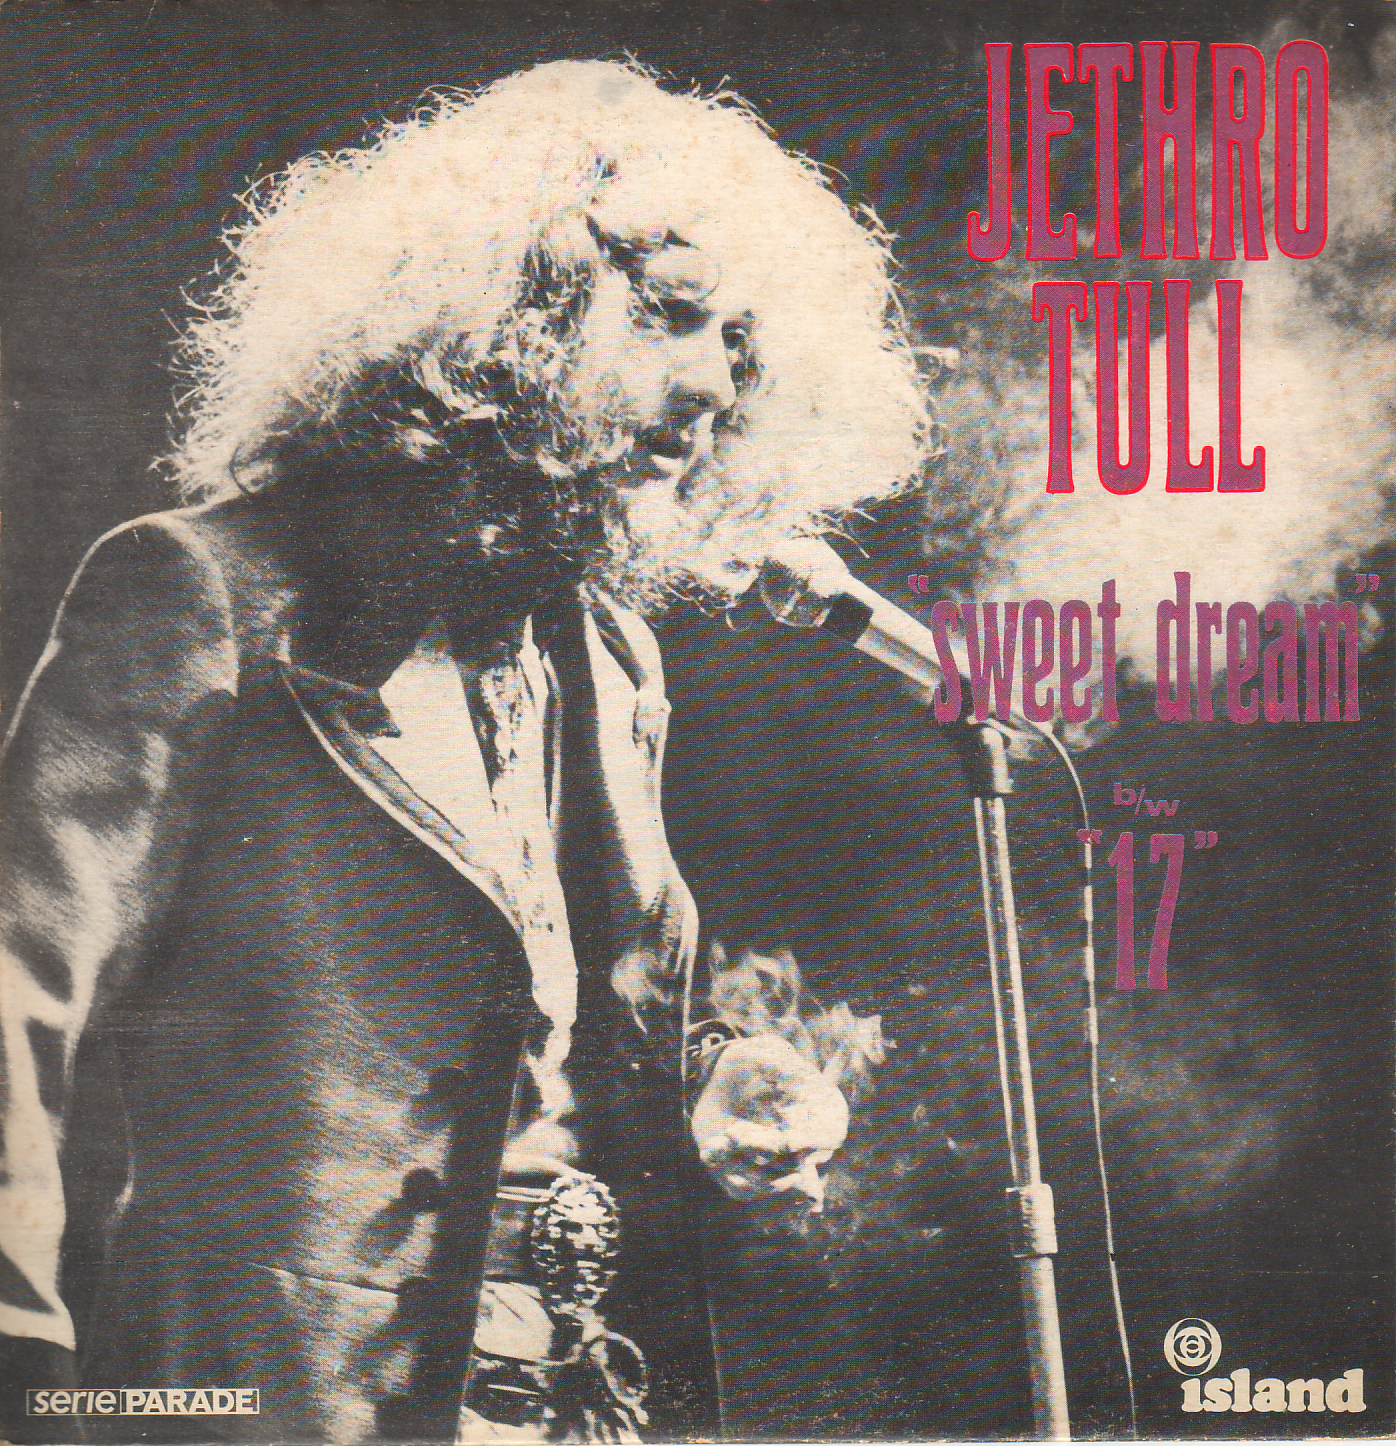 1969 - Jethro Tull - Sweet Dream (French Single)